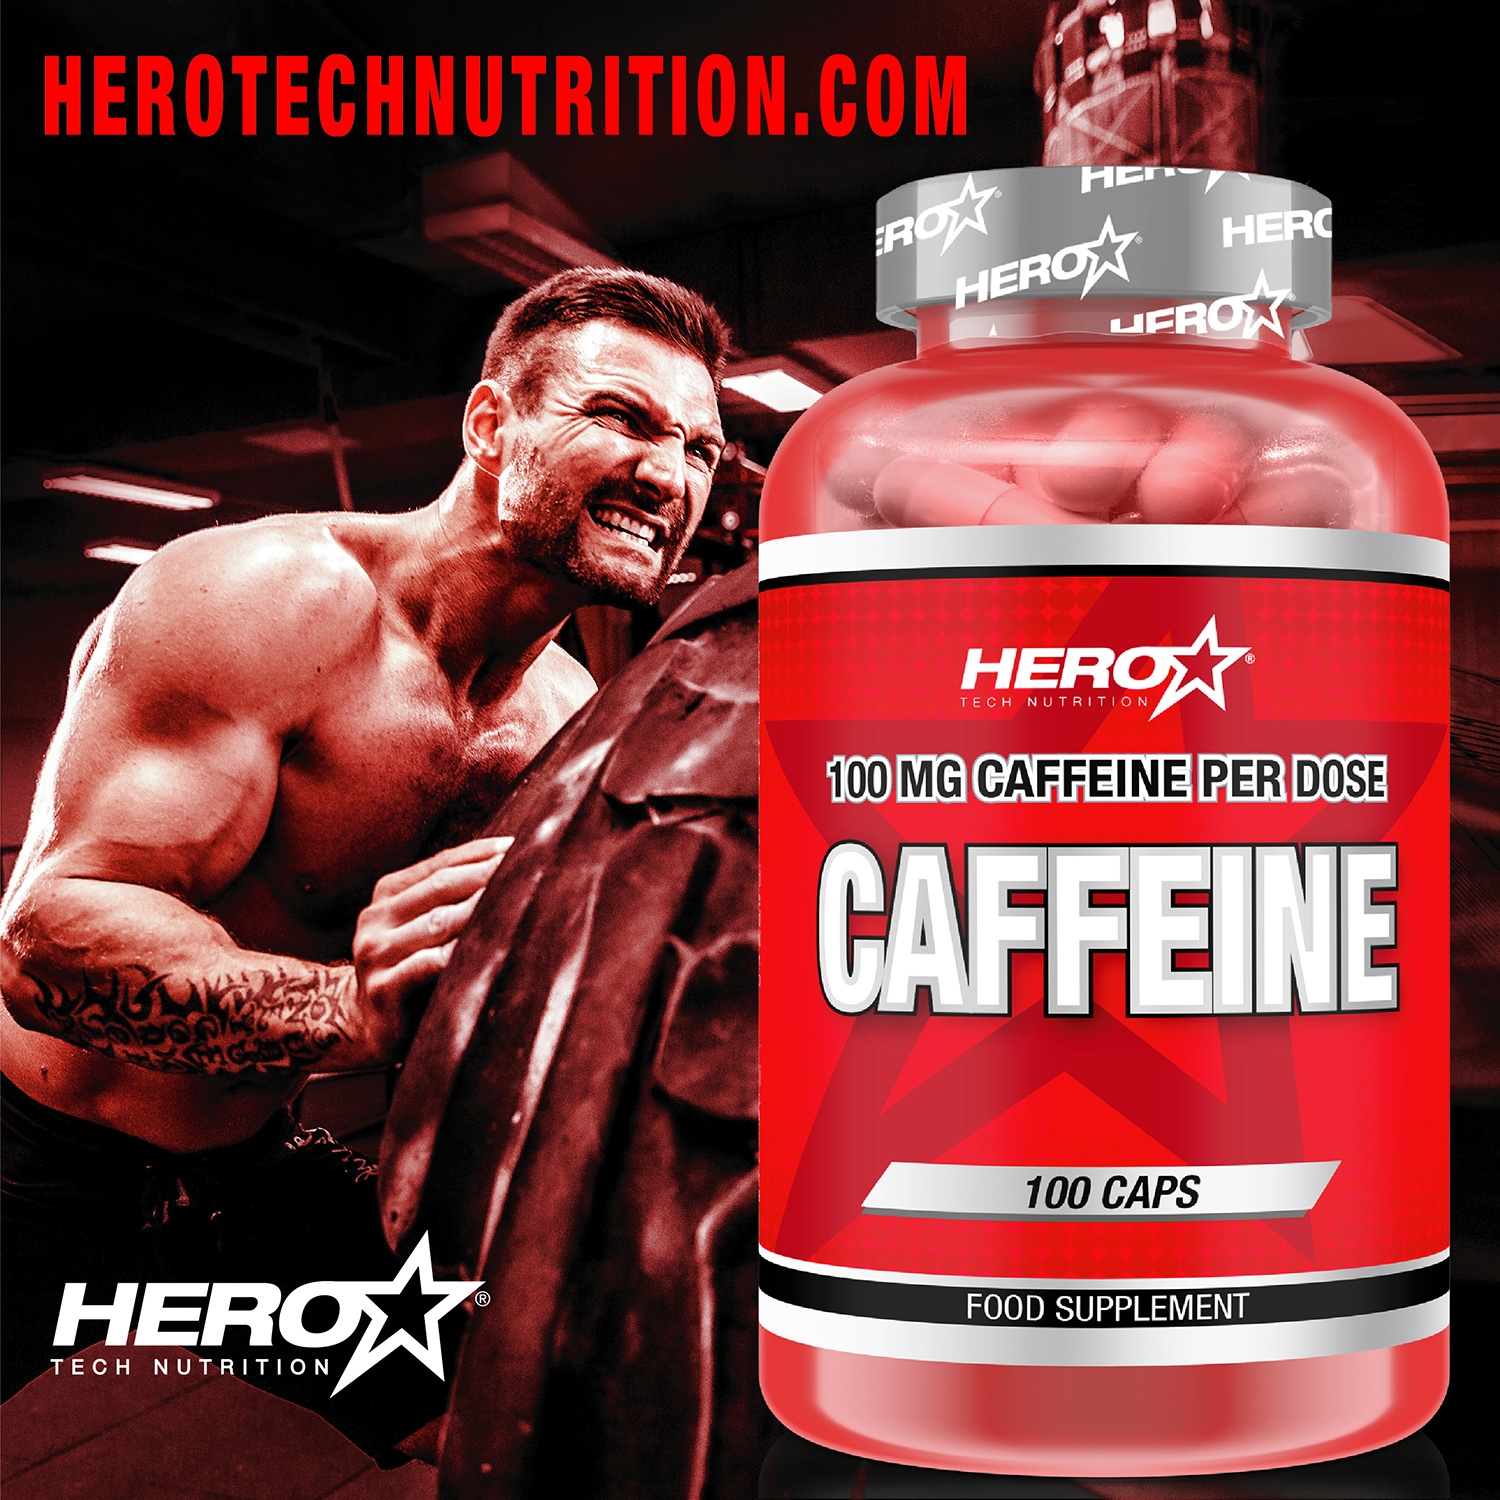 CAFFEINE HERO TECH NUTRITION herotechnutrition